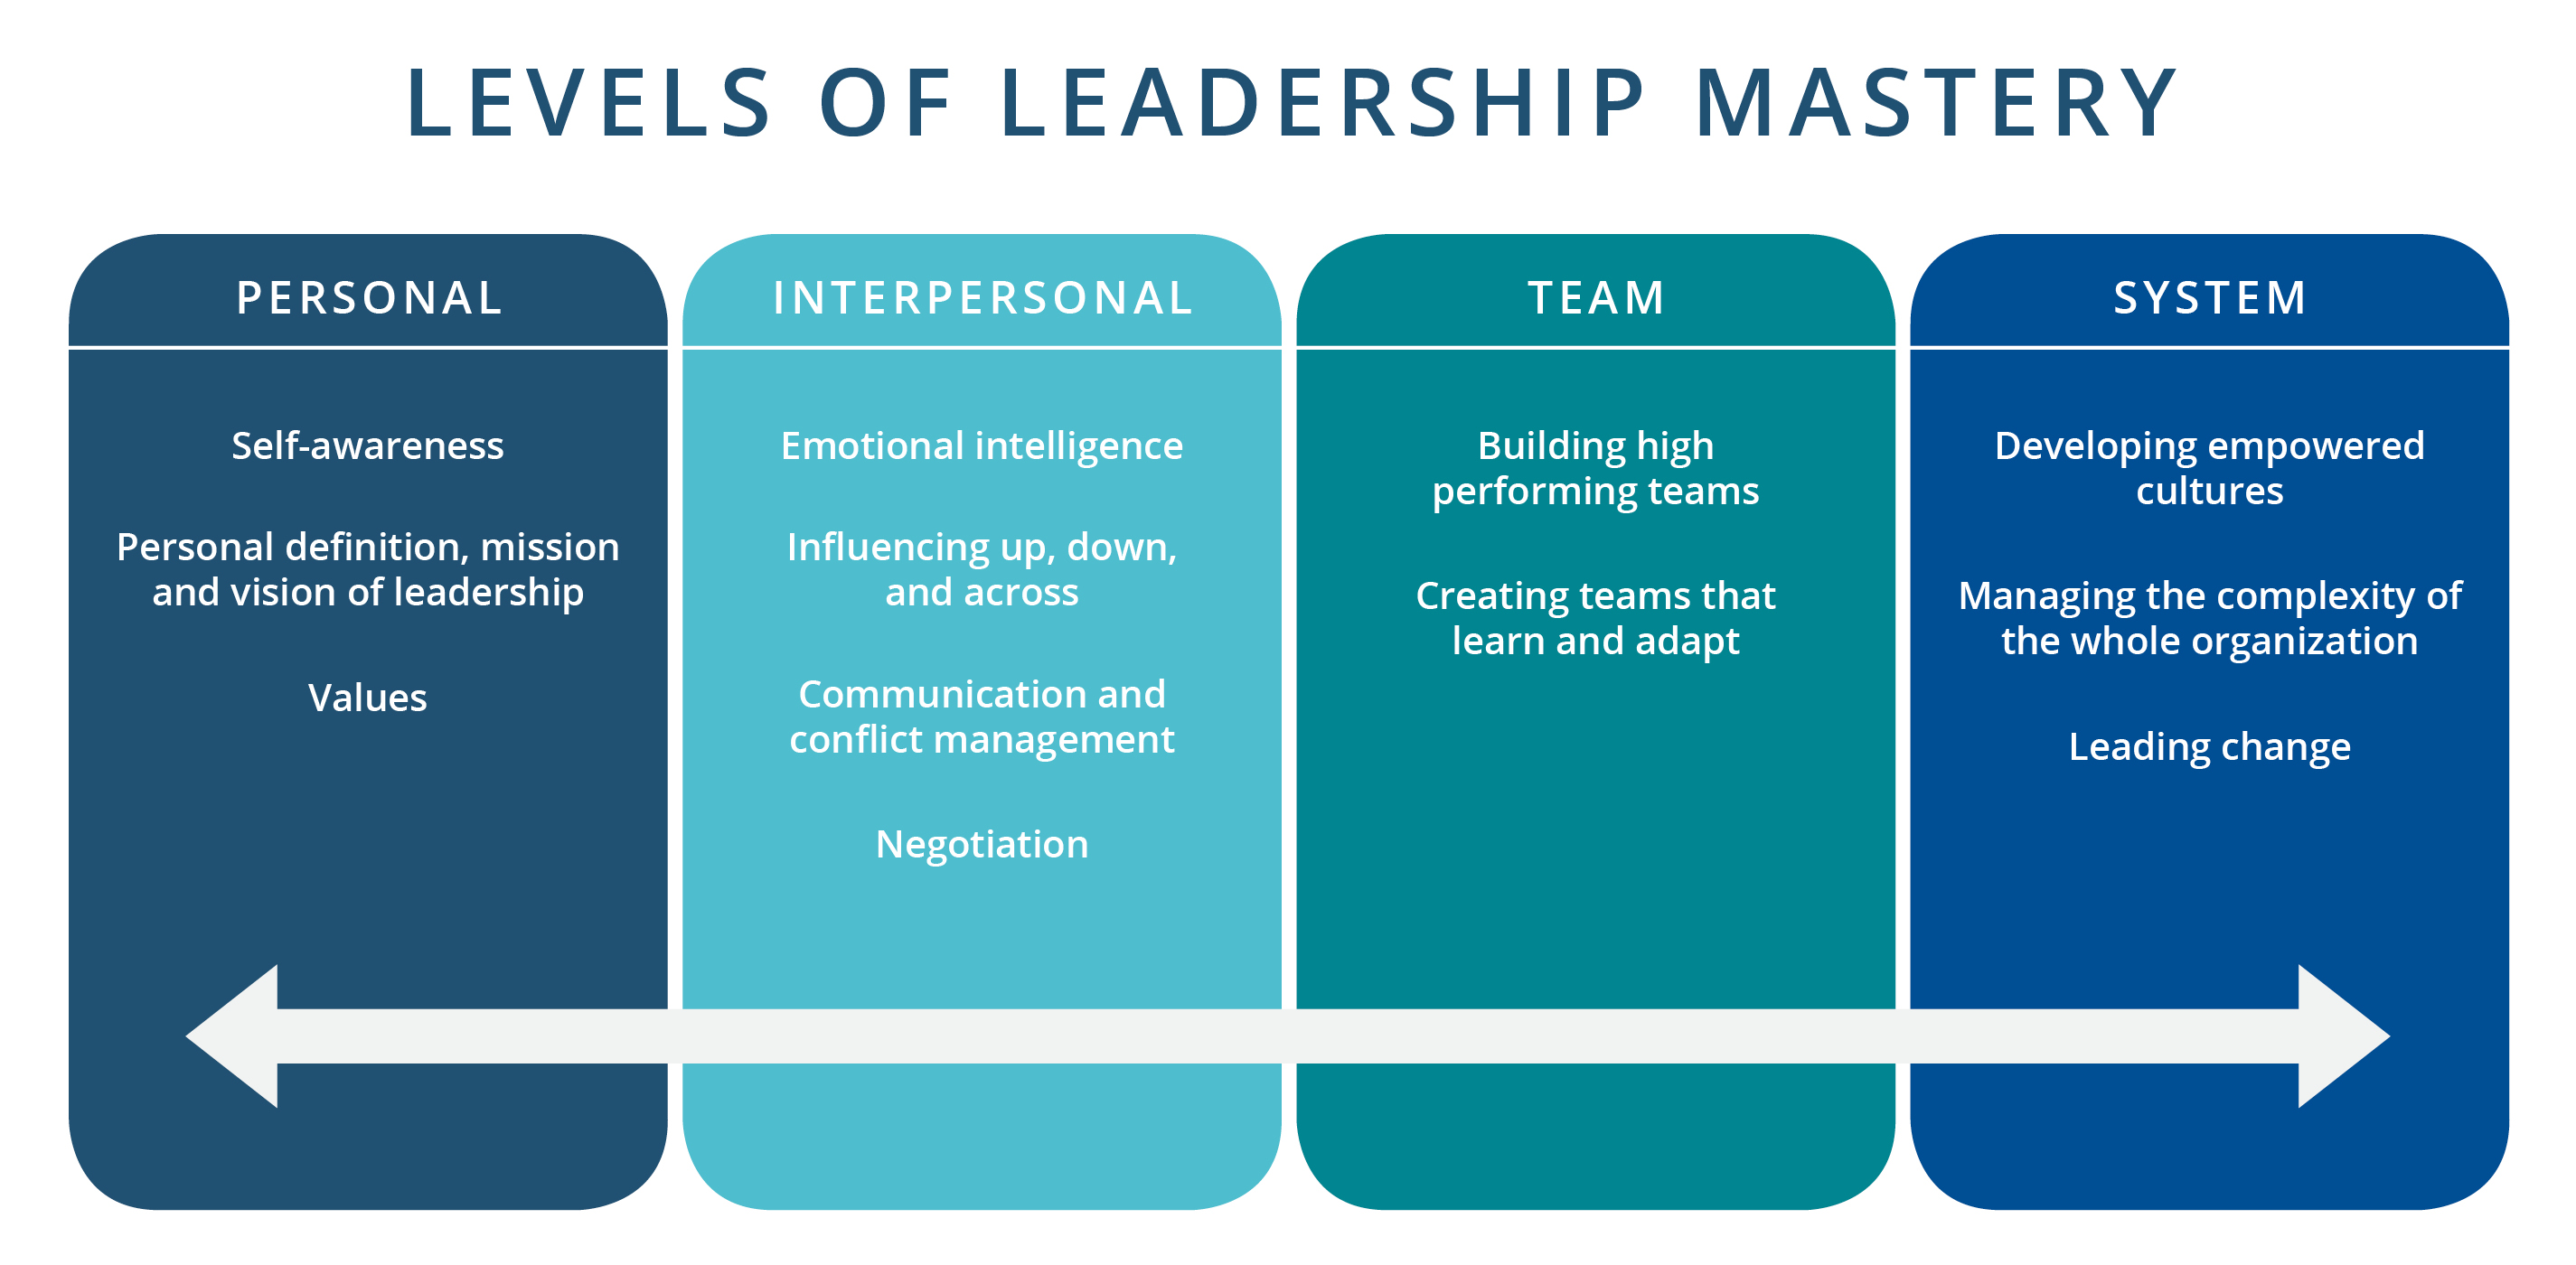 Leadership Maturity Model